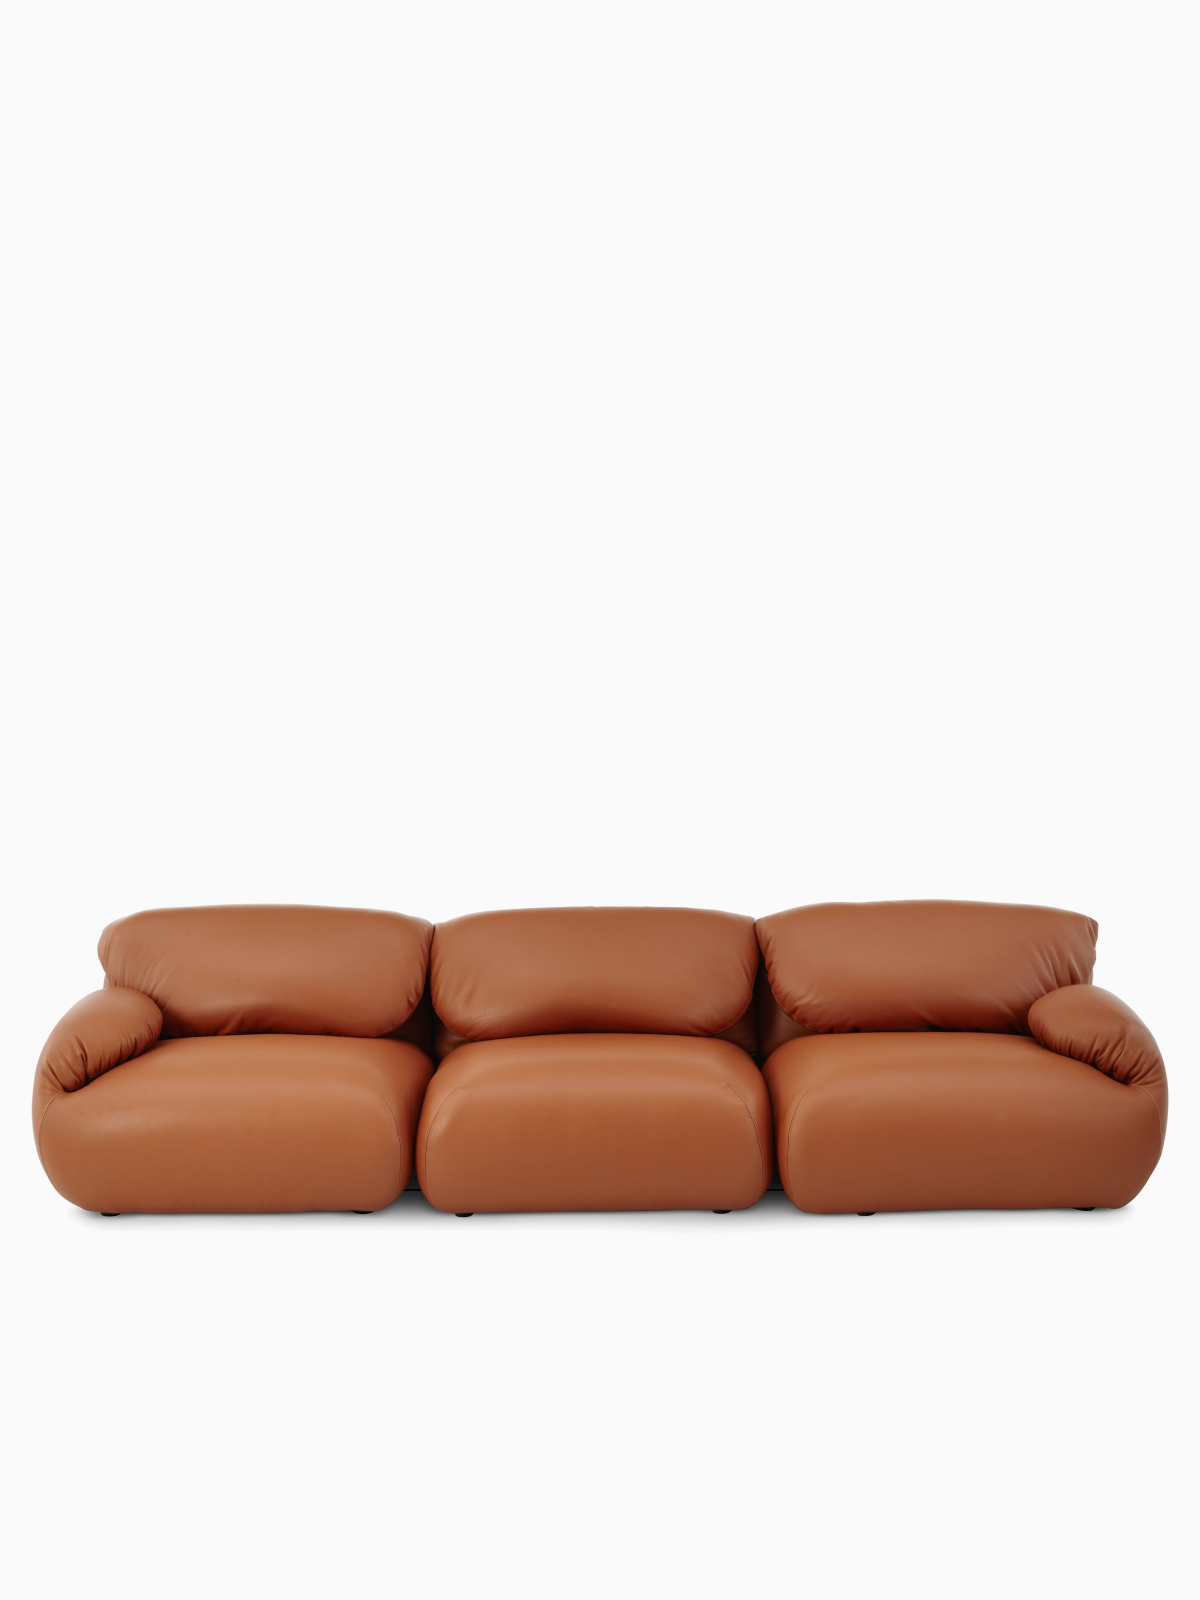 Grupo de sofás modulares Luva